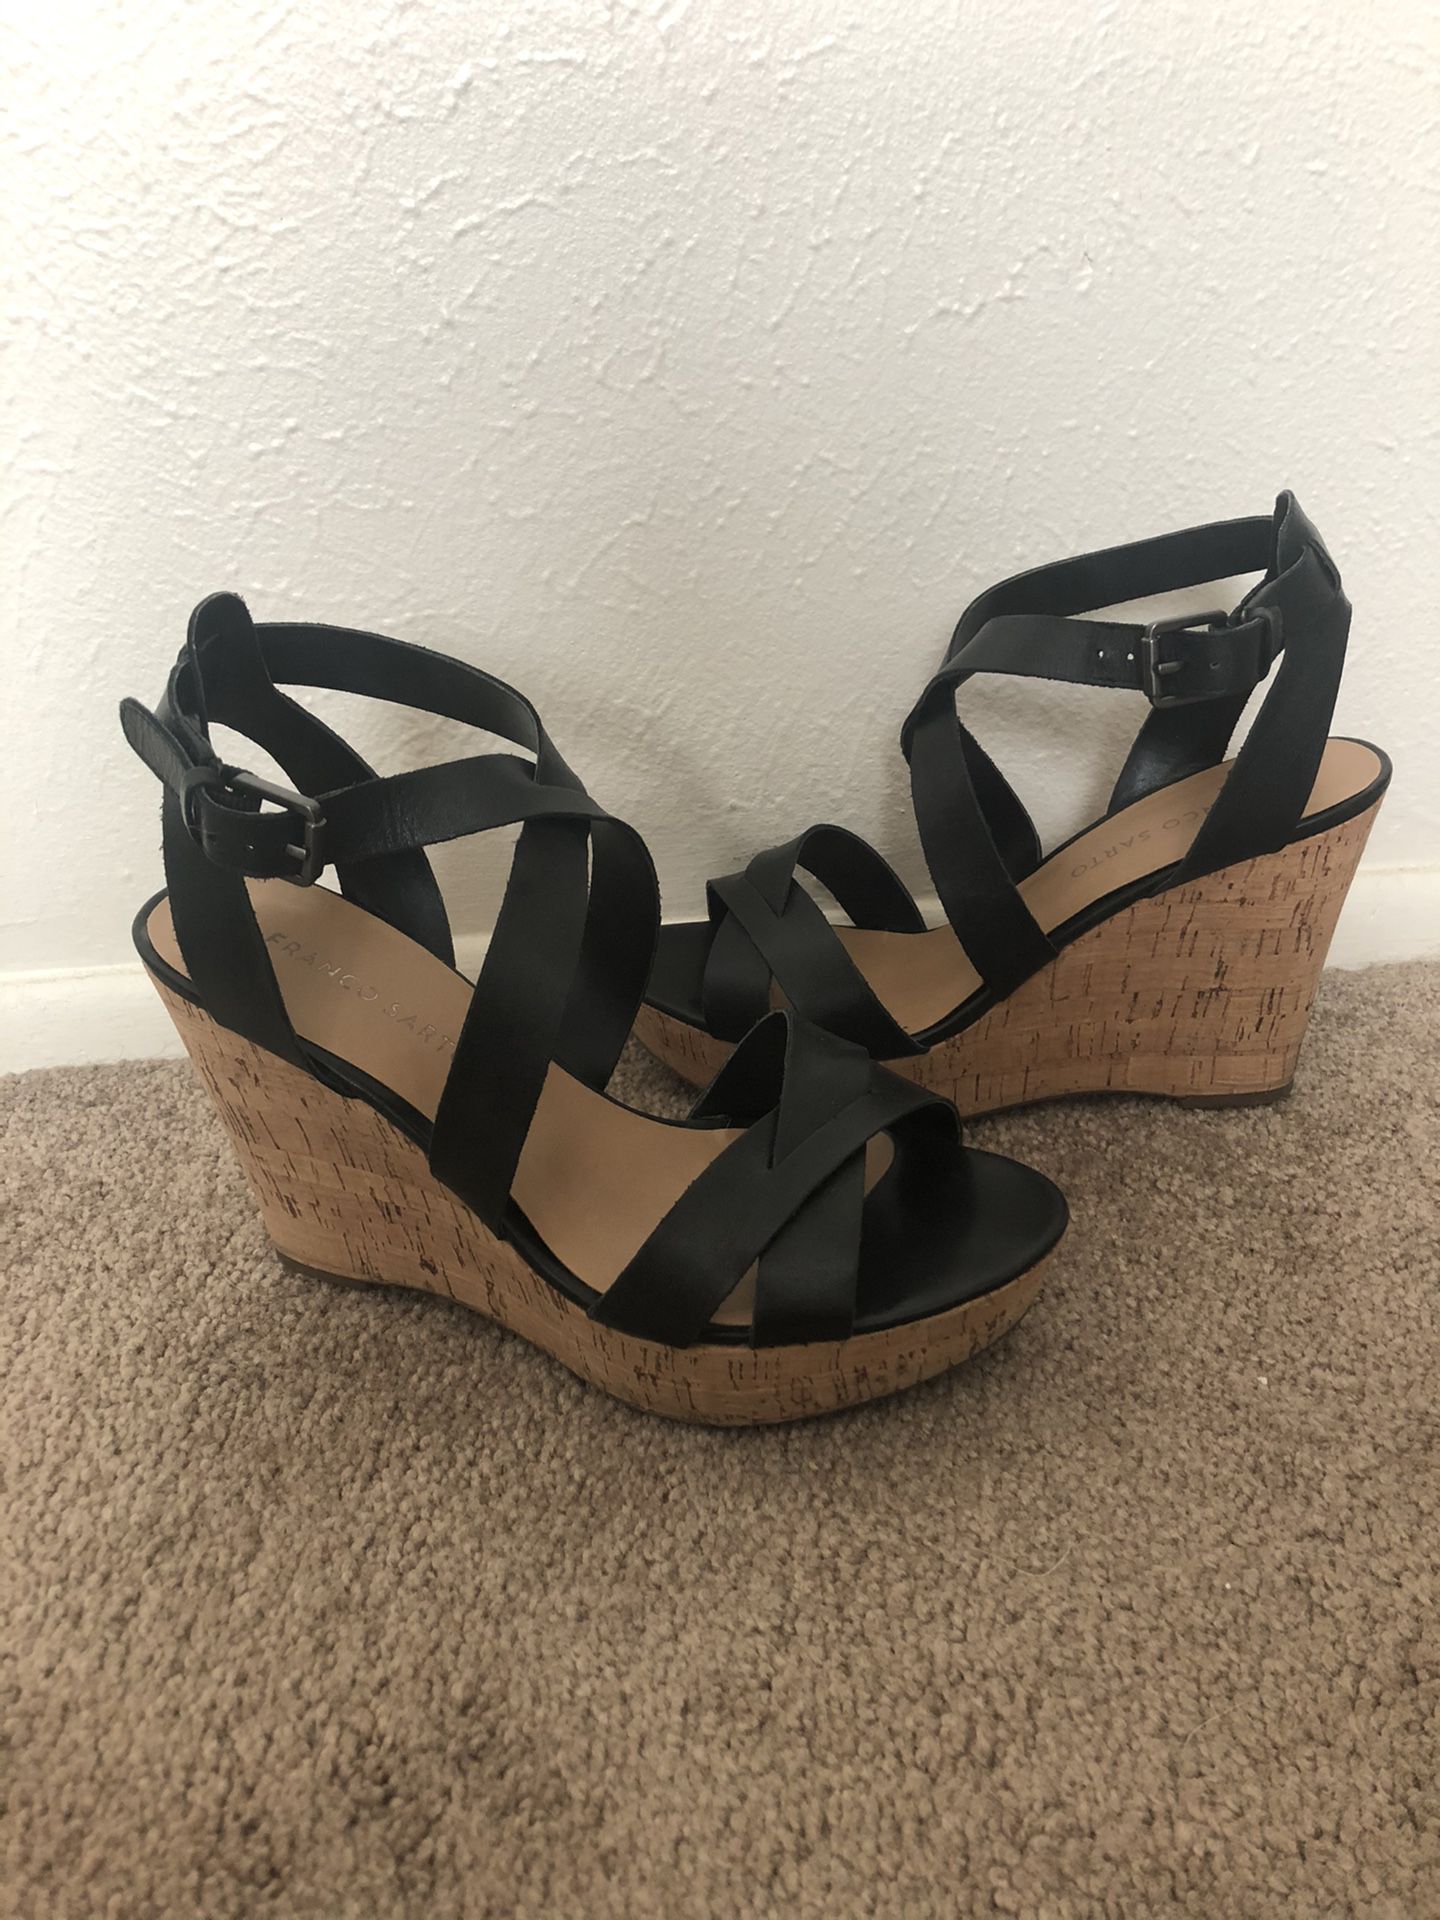 Woman’s Heels Size 8 for Sale in Santa Fe, NM - OfferUp